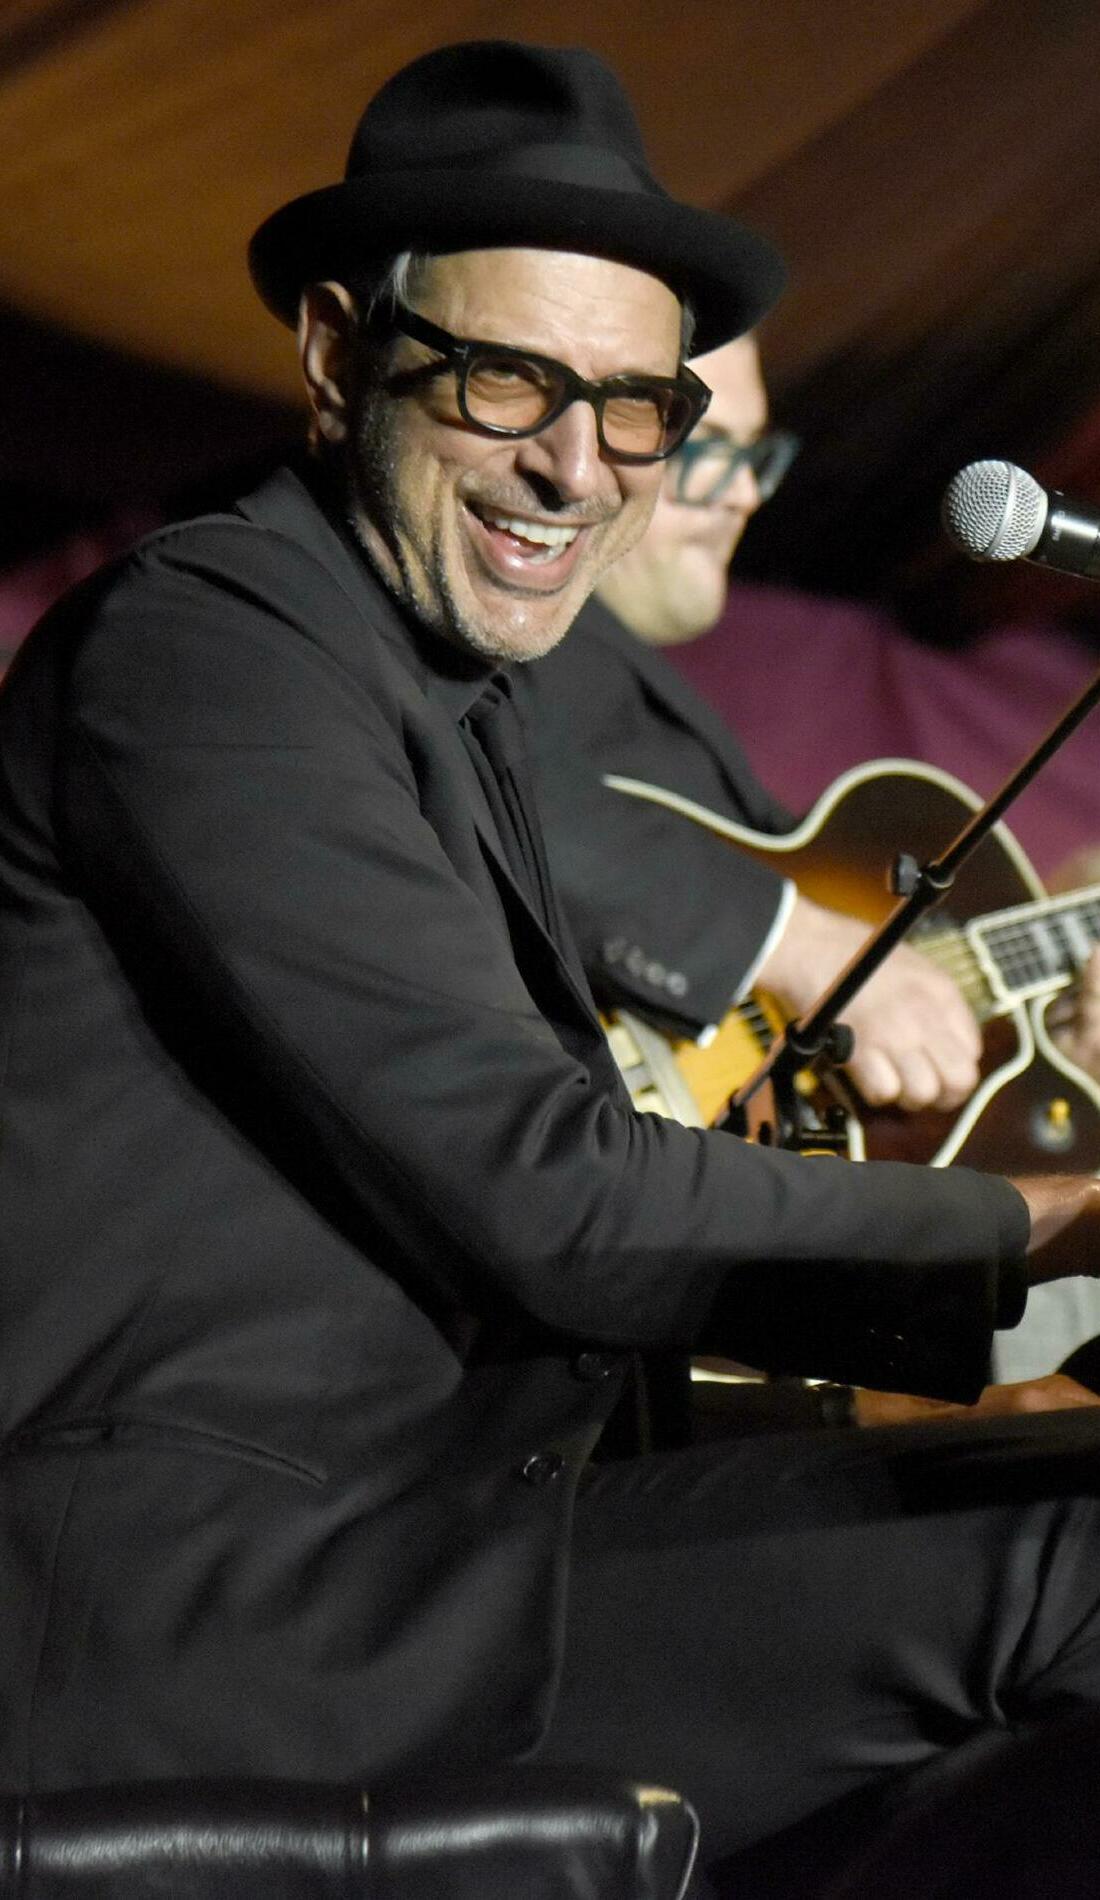 A Jeff Goldblum live event